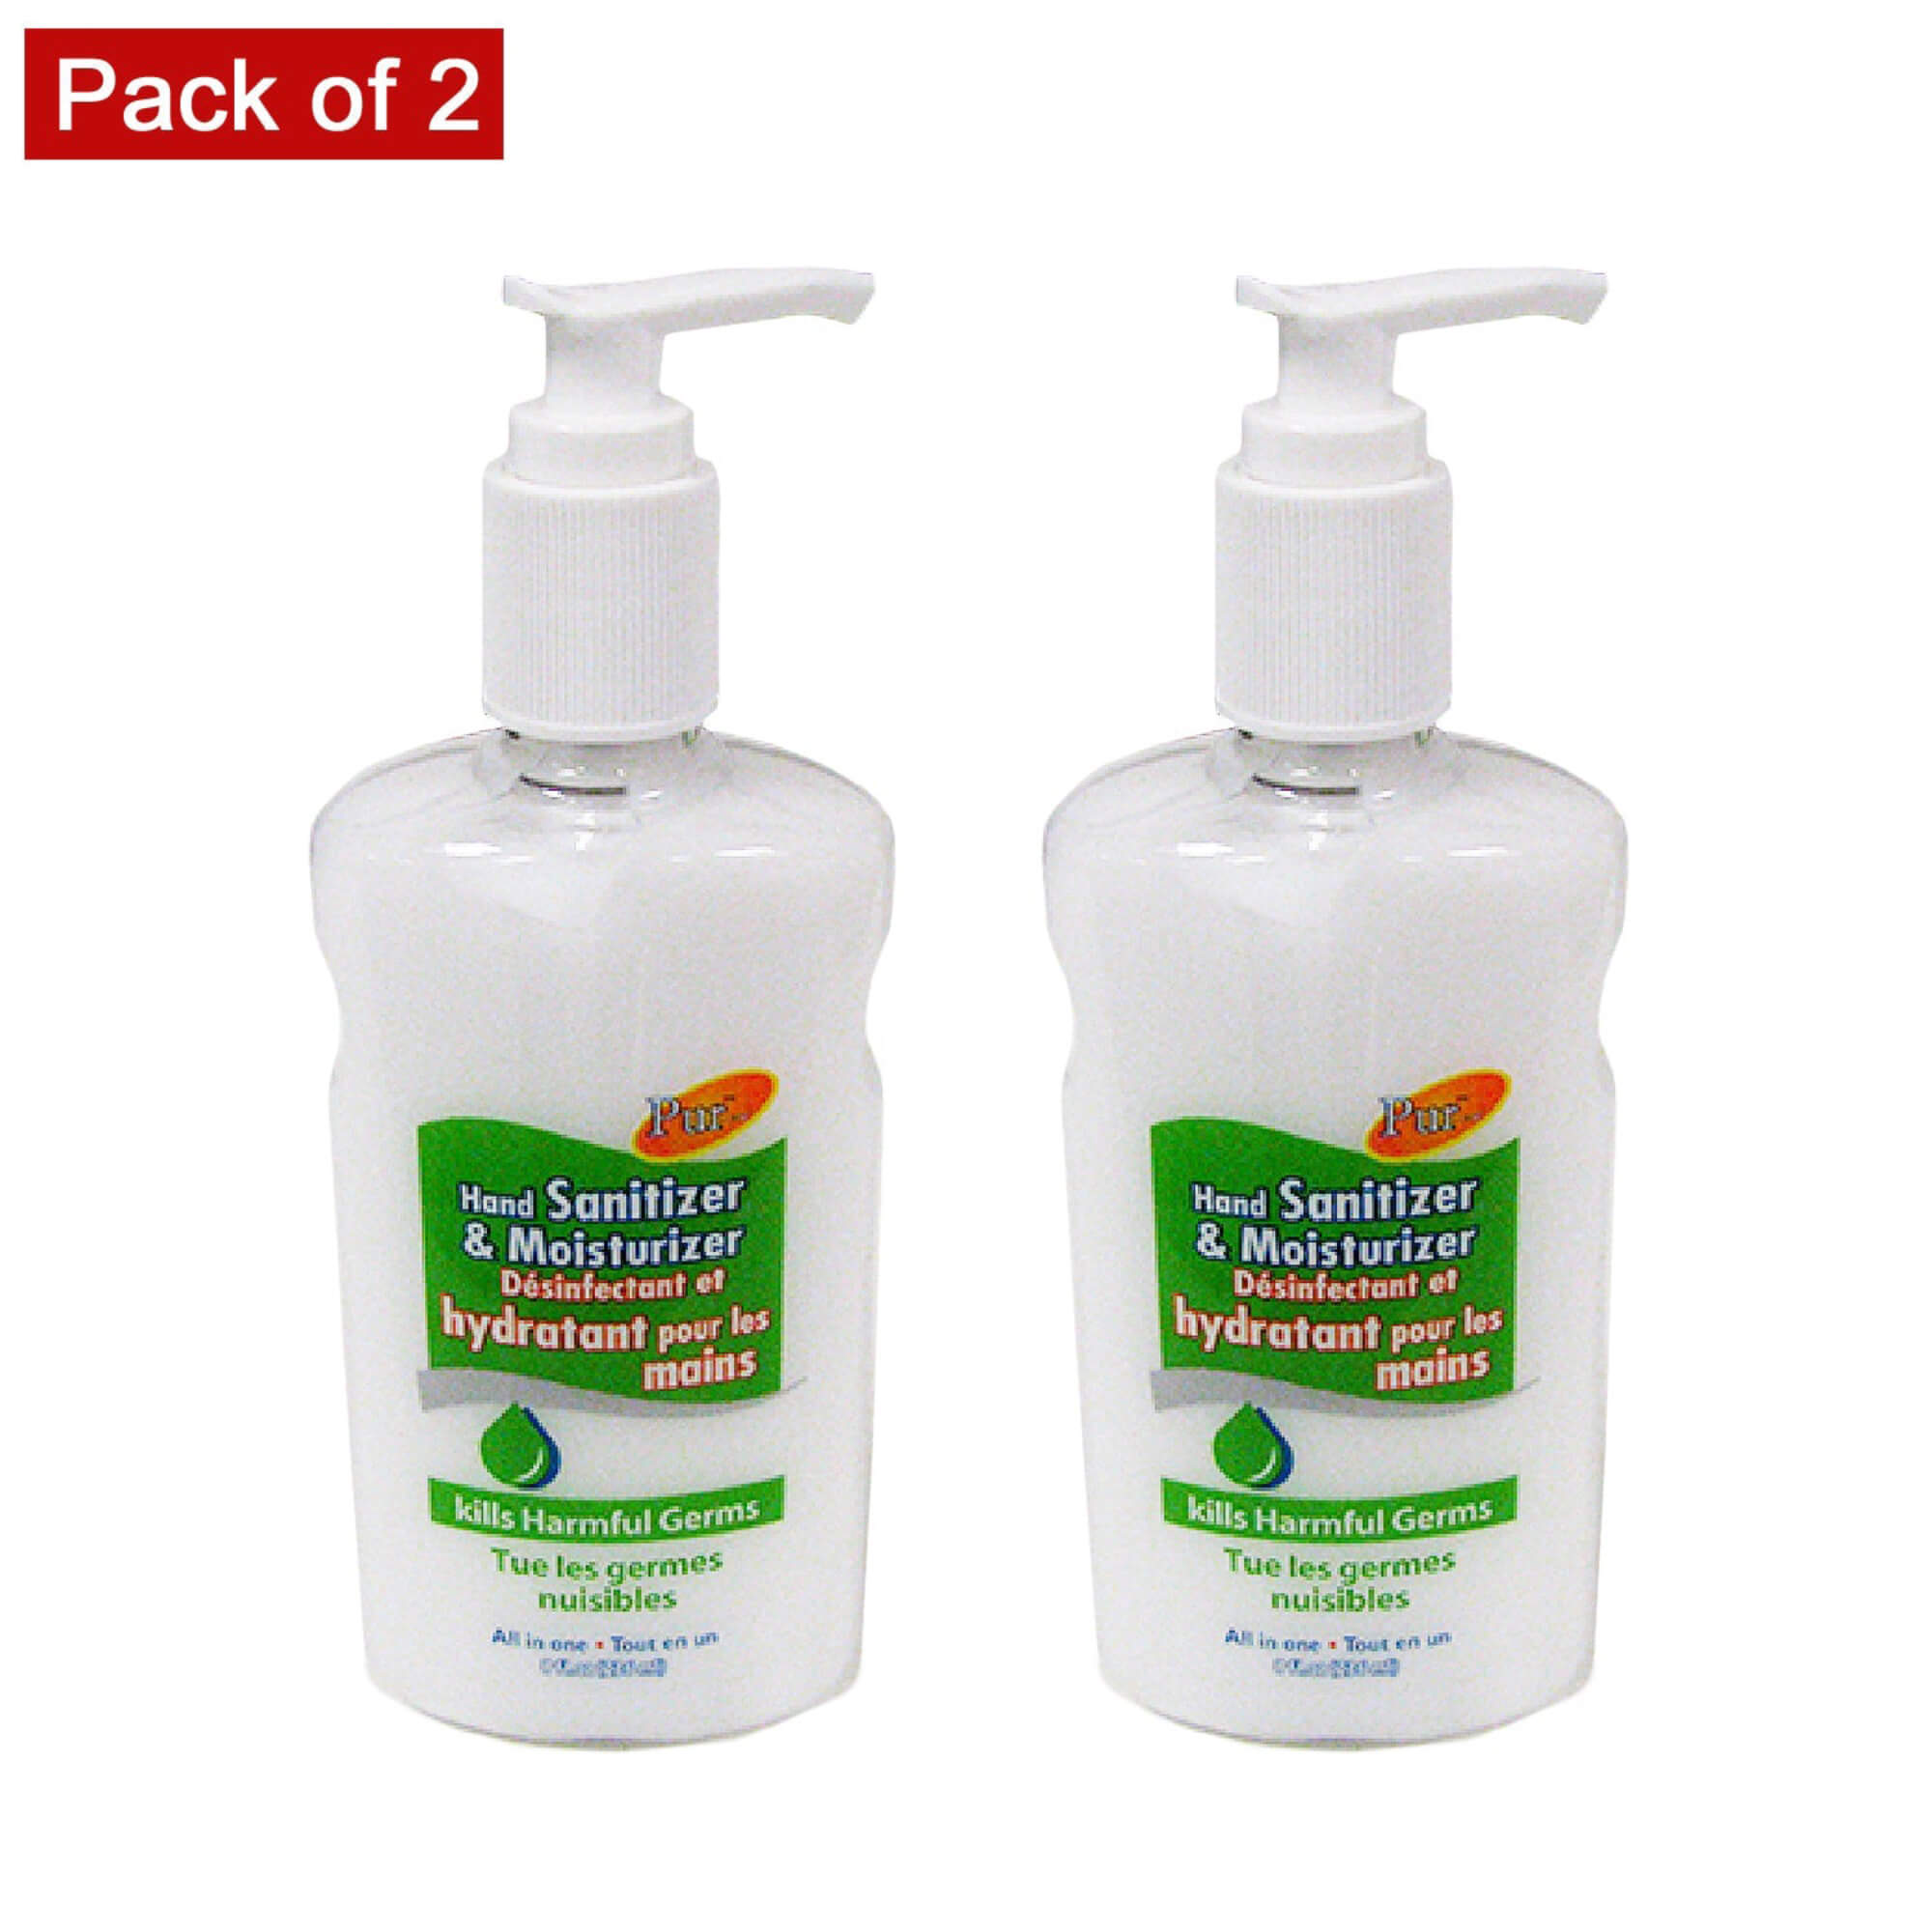 Pur-est Hand Sanitizer & Moisturizer (236ml) - Pack of 2